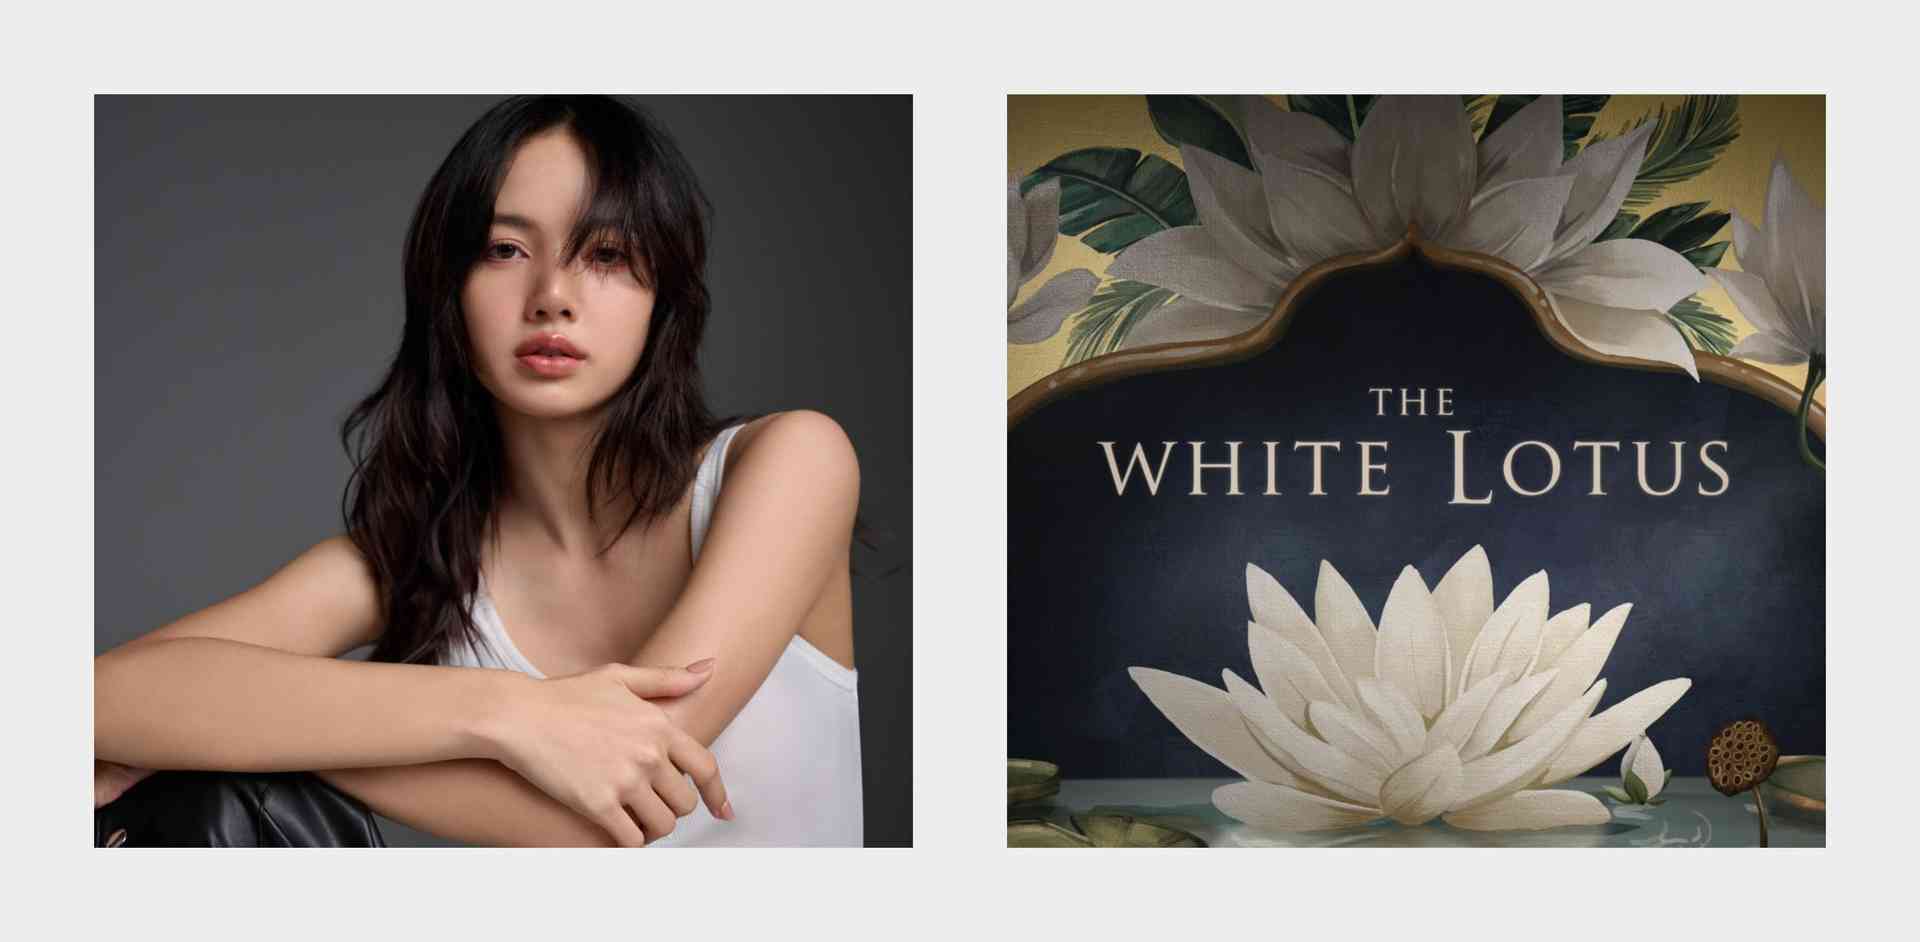 BLACKPINK's Lisa to make acting debut in American TV series “The White Lotus”